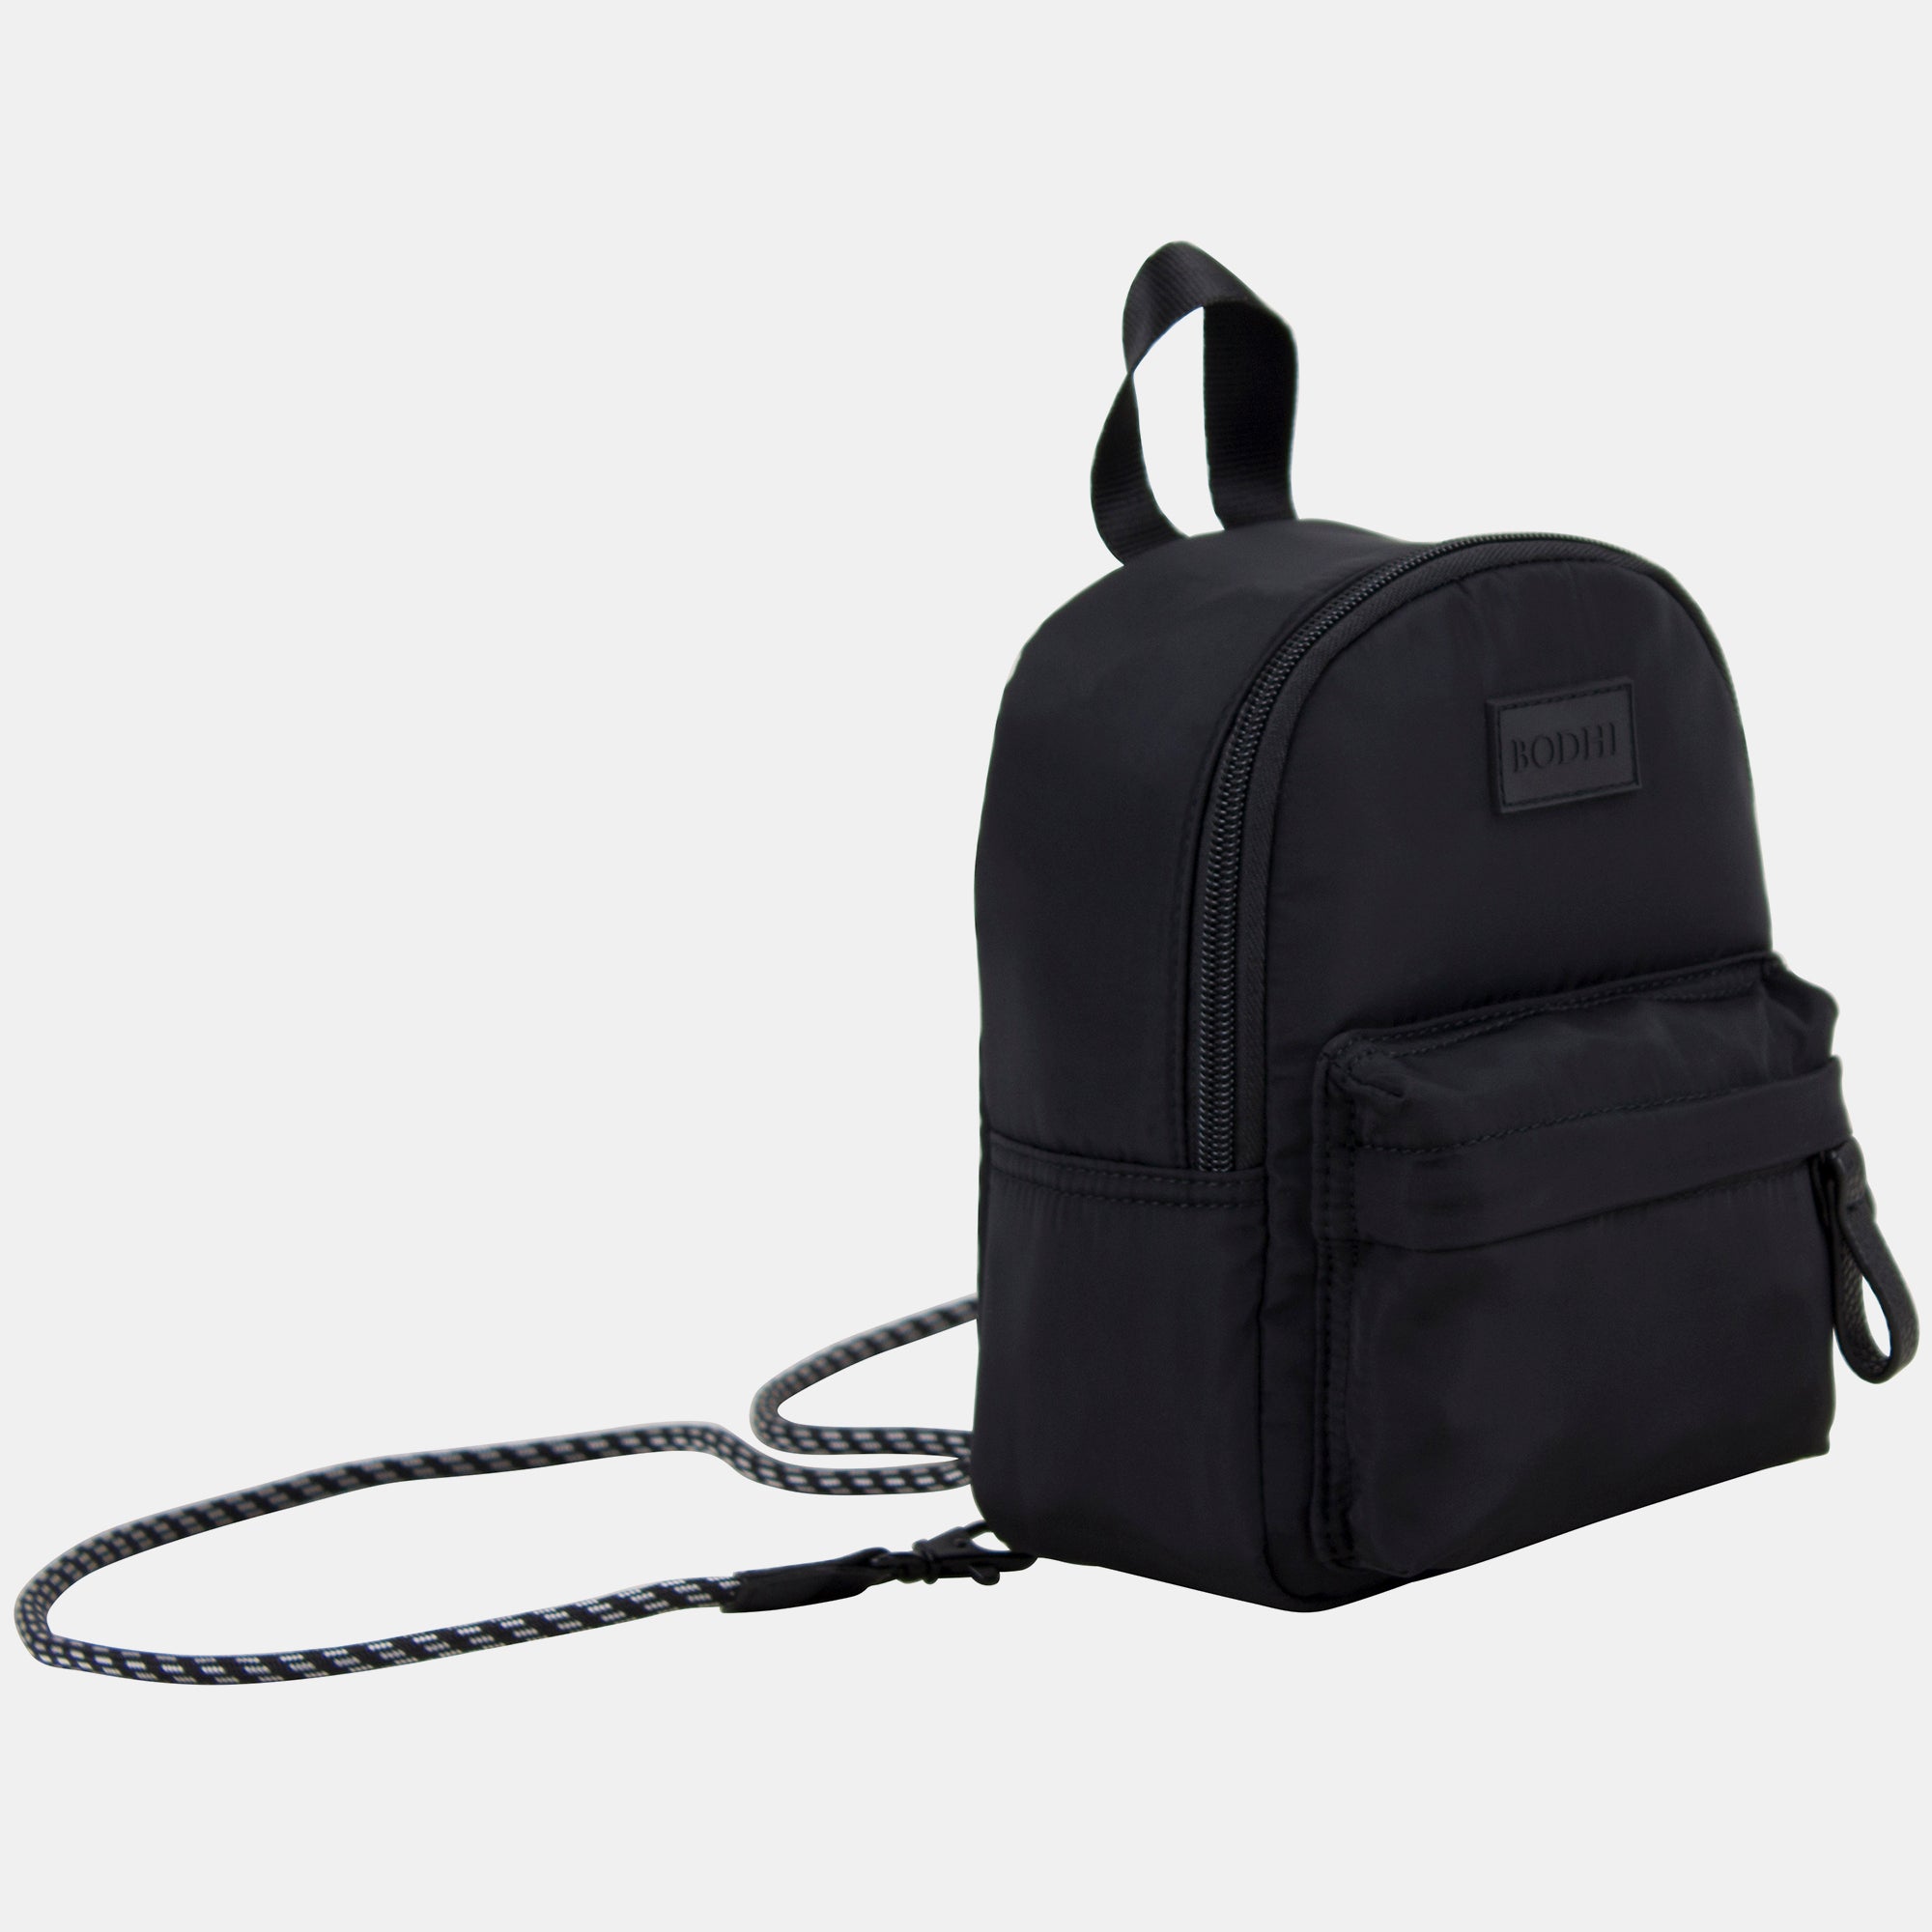 BODHI Metro Soft Puffy Convertible Mini Backpack/Crossbody Bag, 8